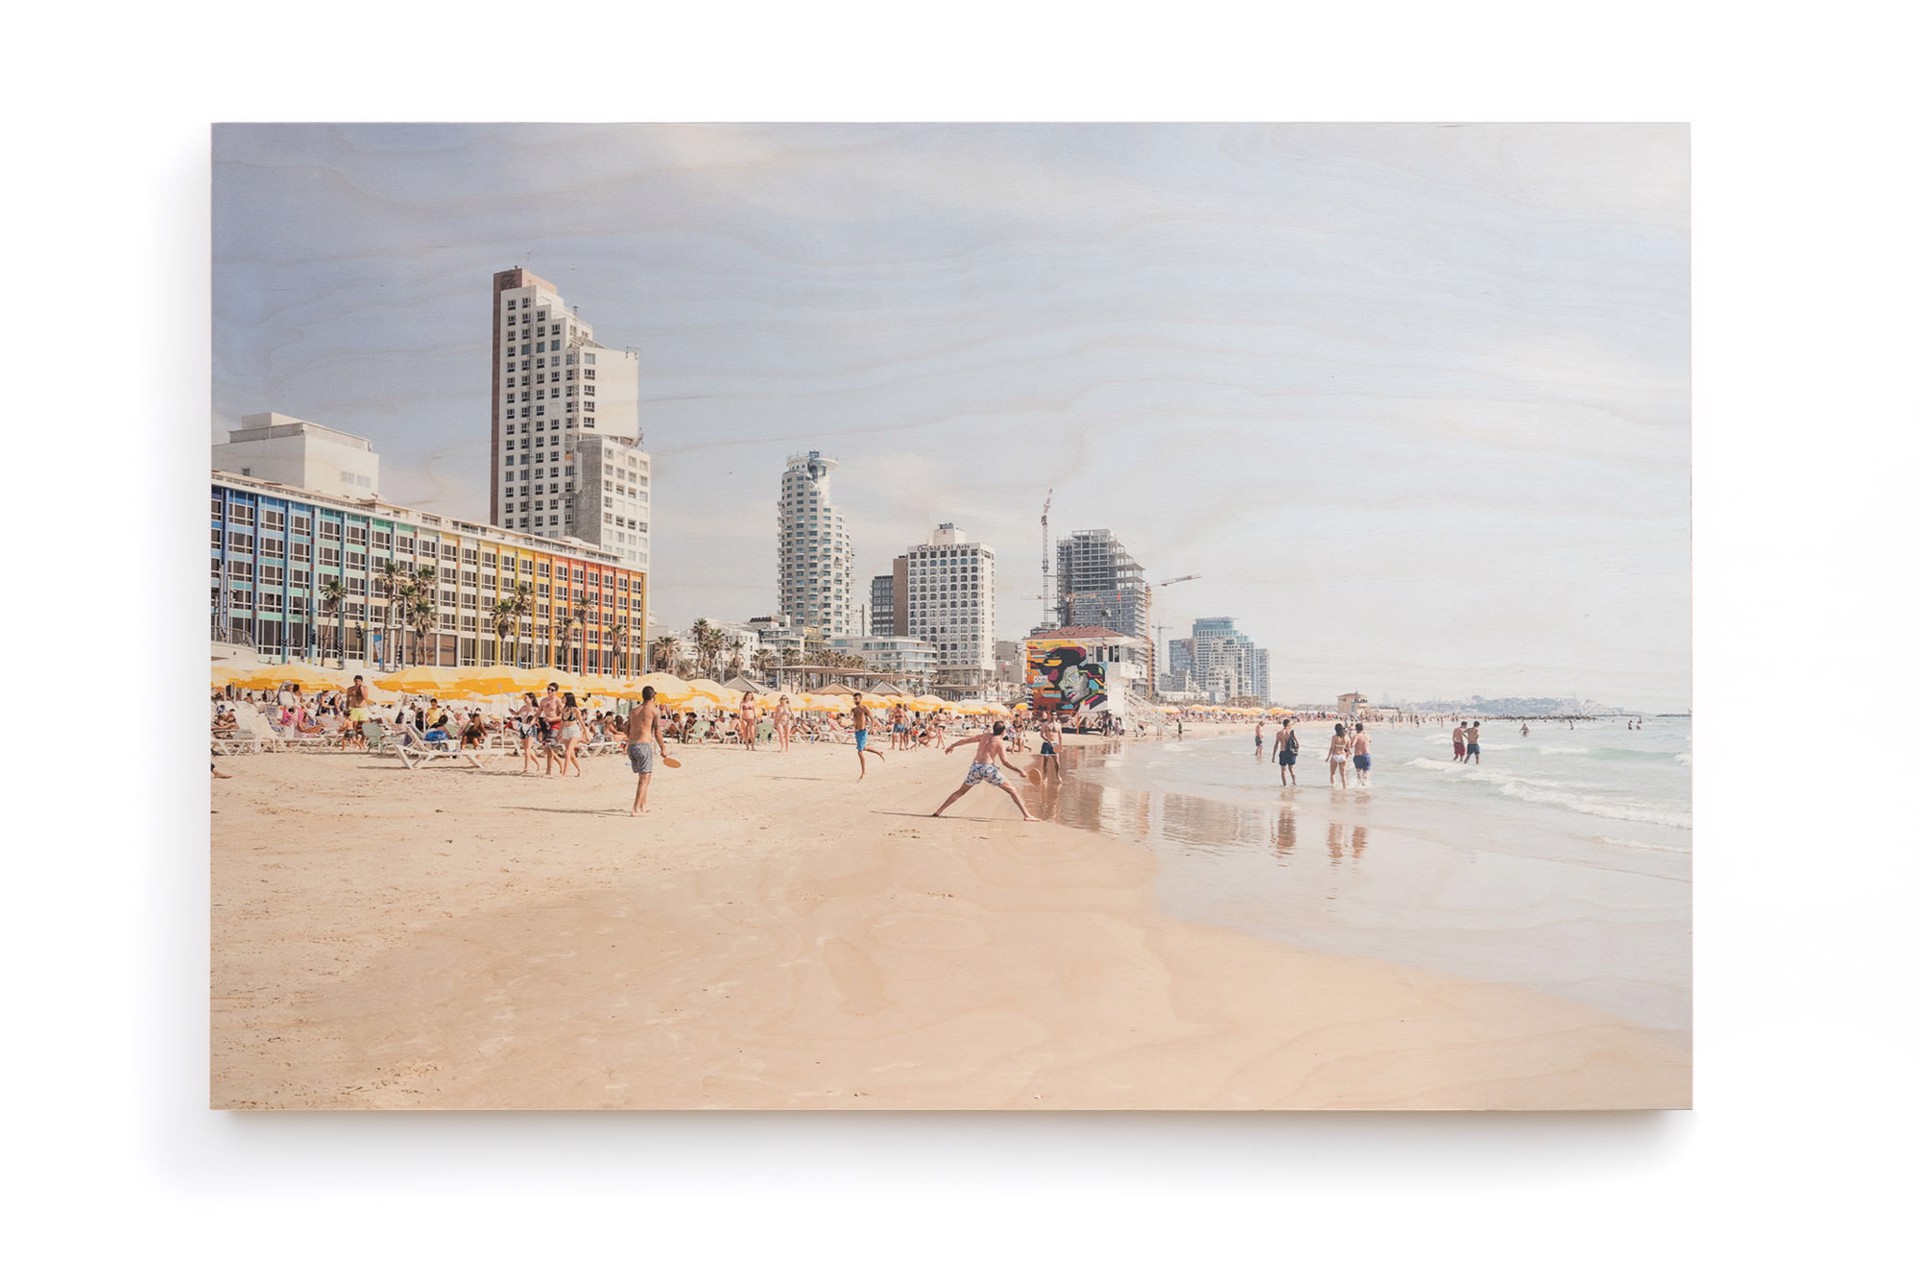 Tel Aviv No 525 by Patrick Lajoie